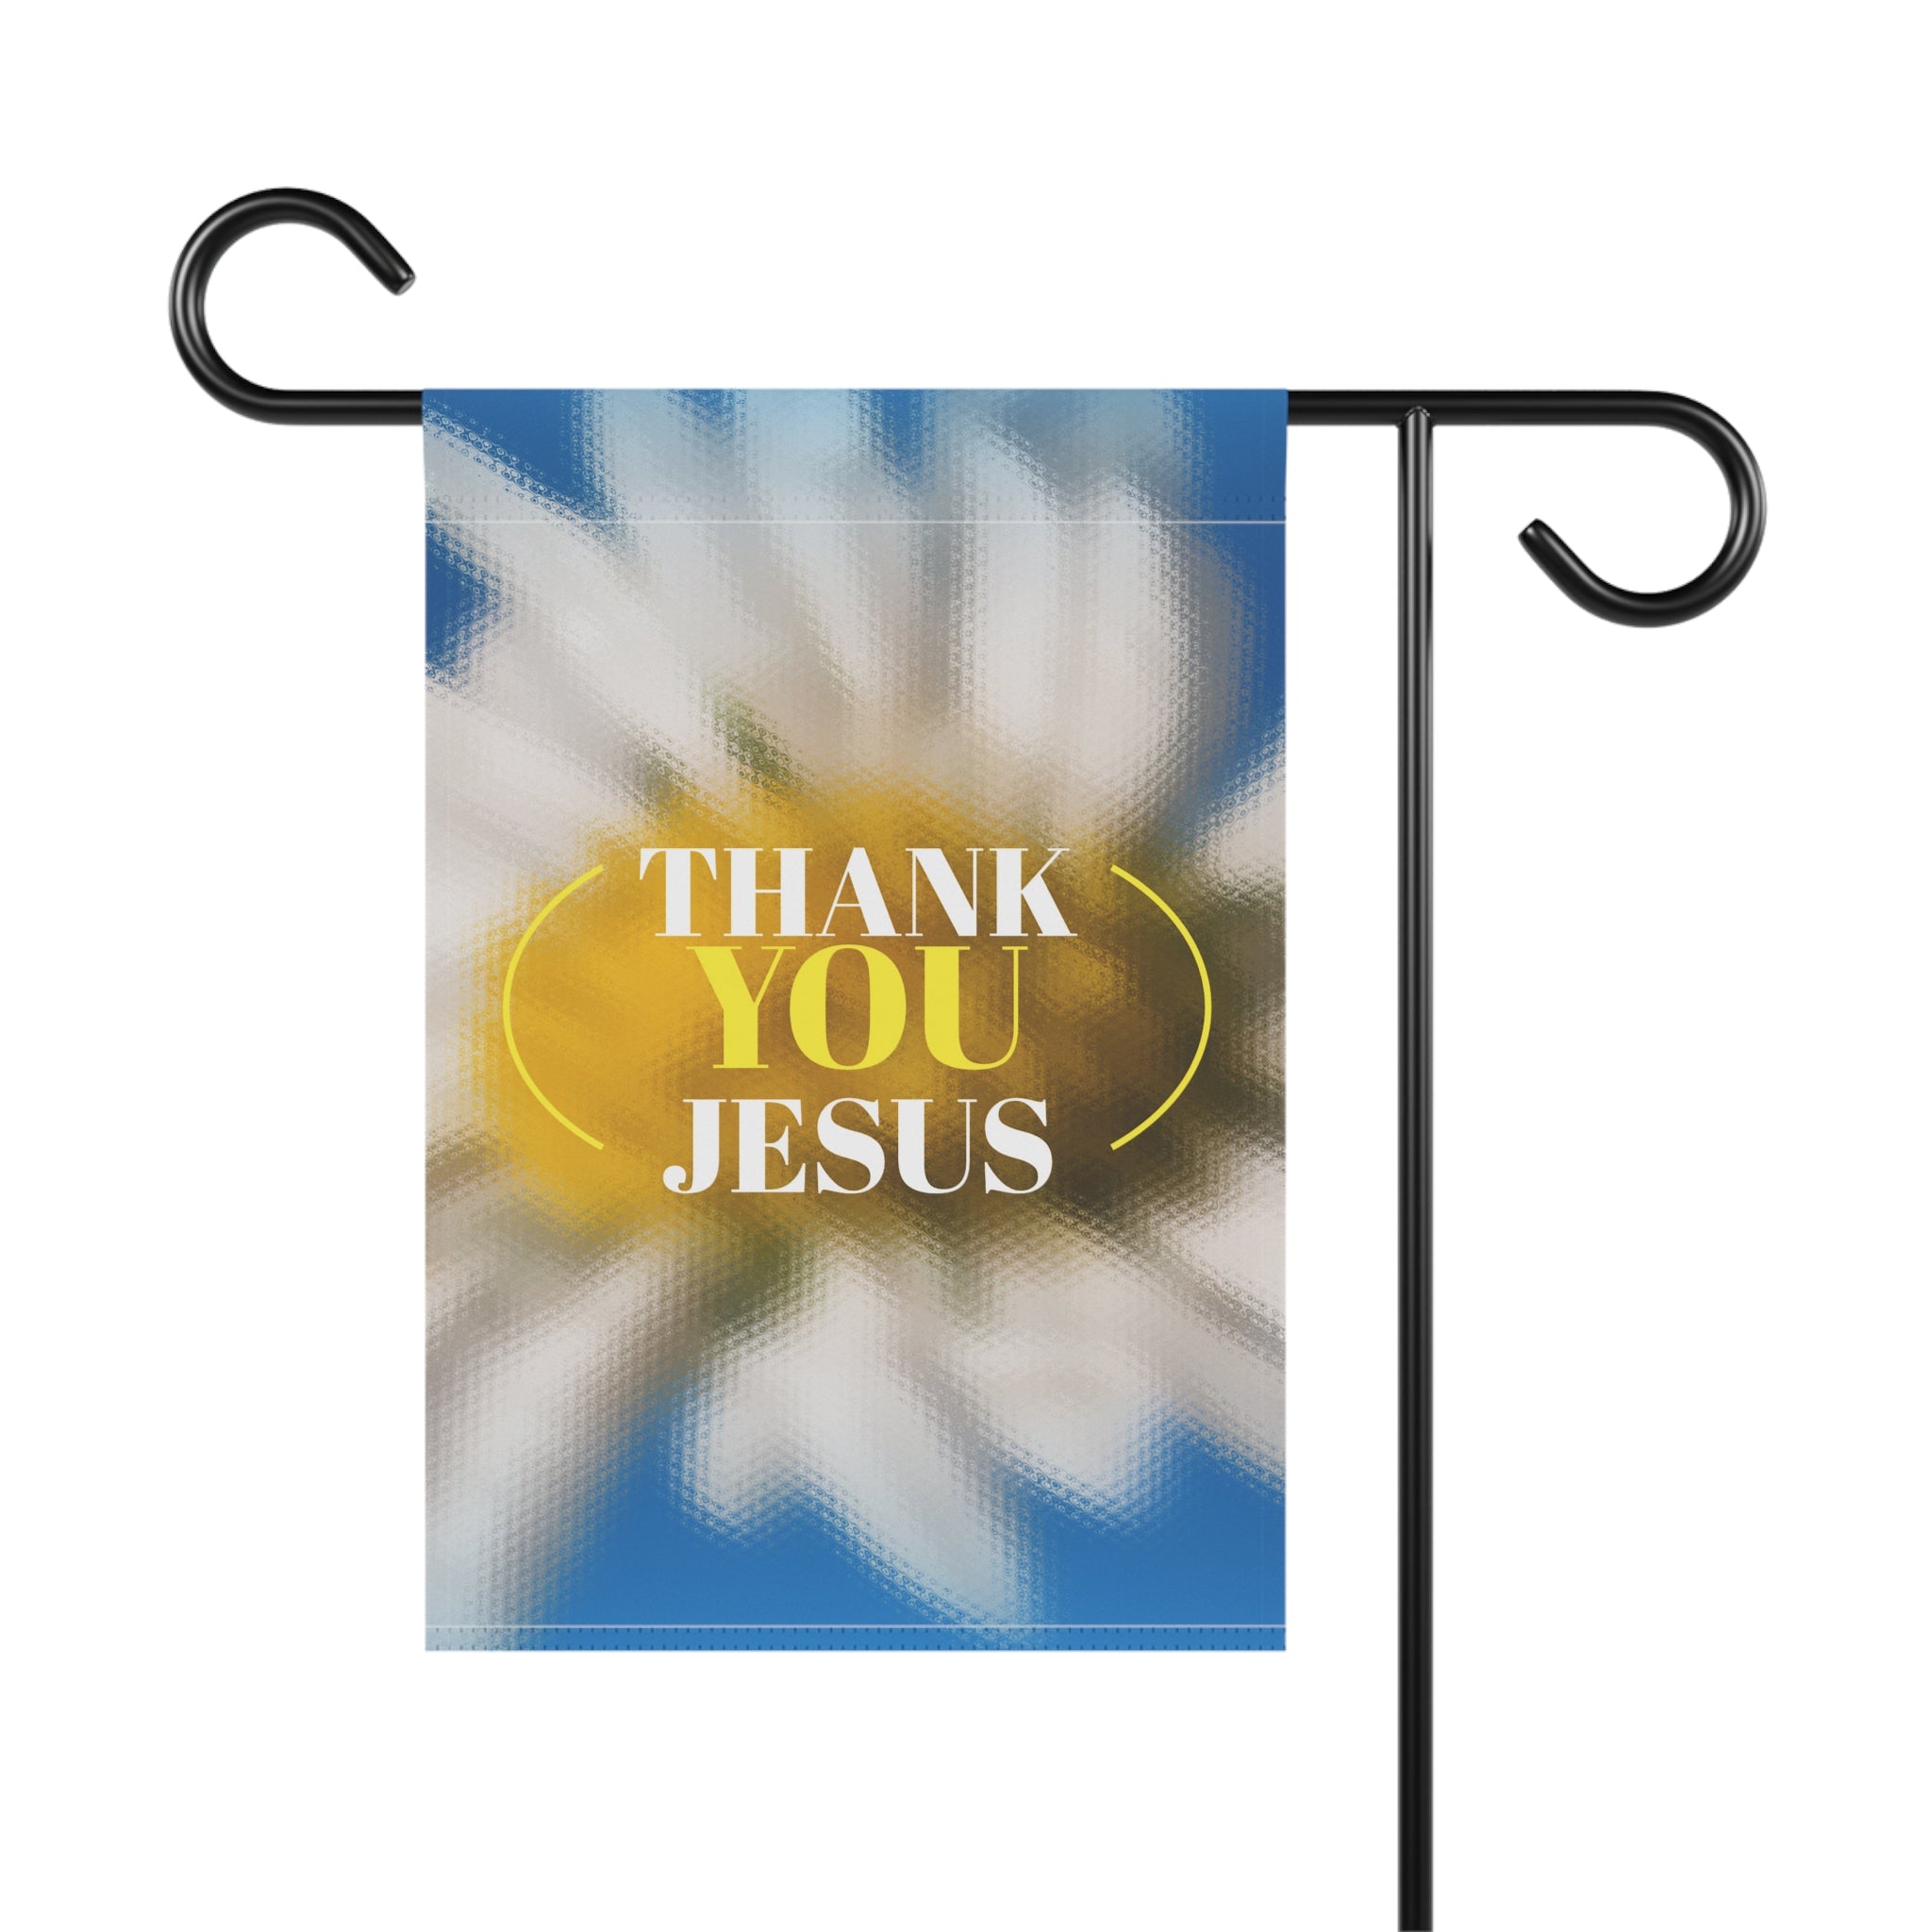 THANK YOU JESUS Garden flag 12x18